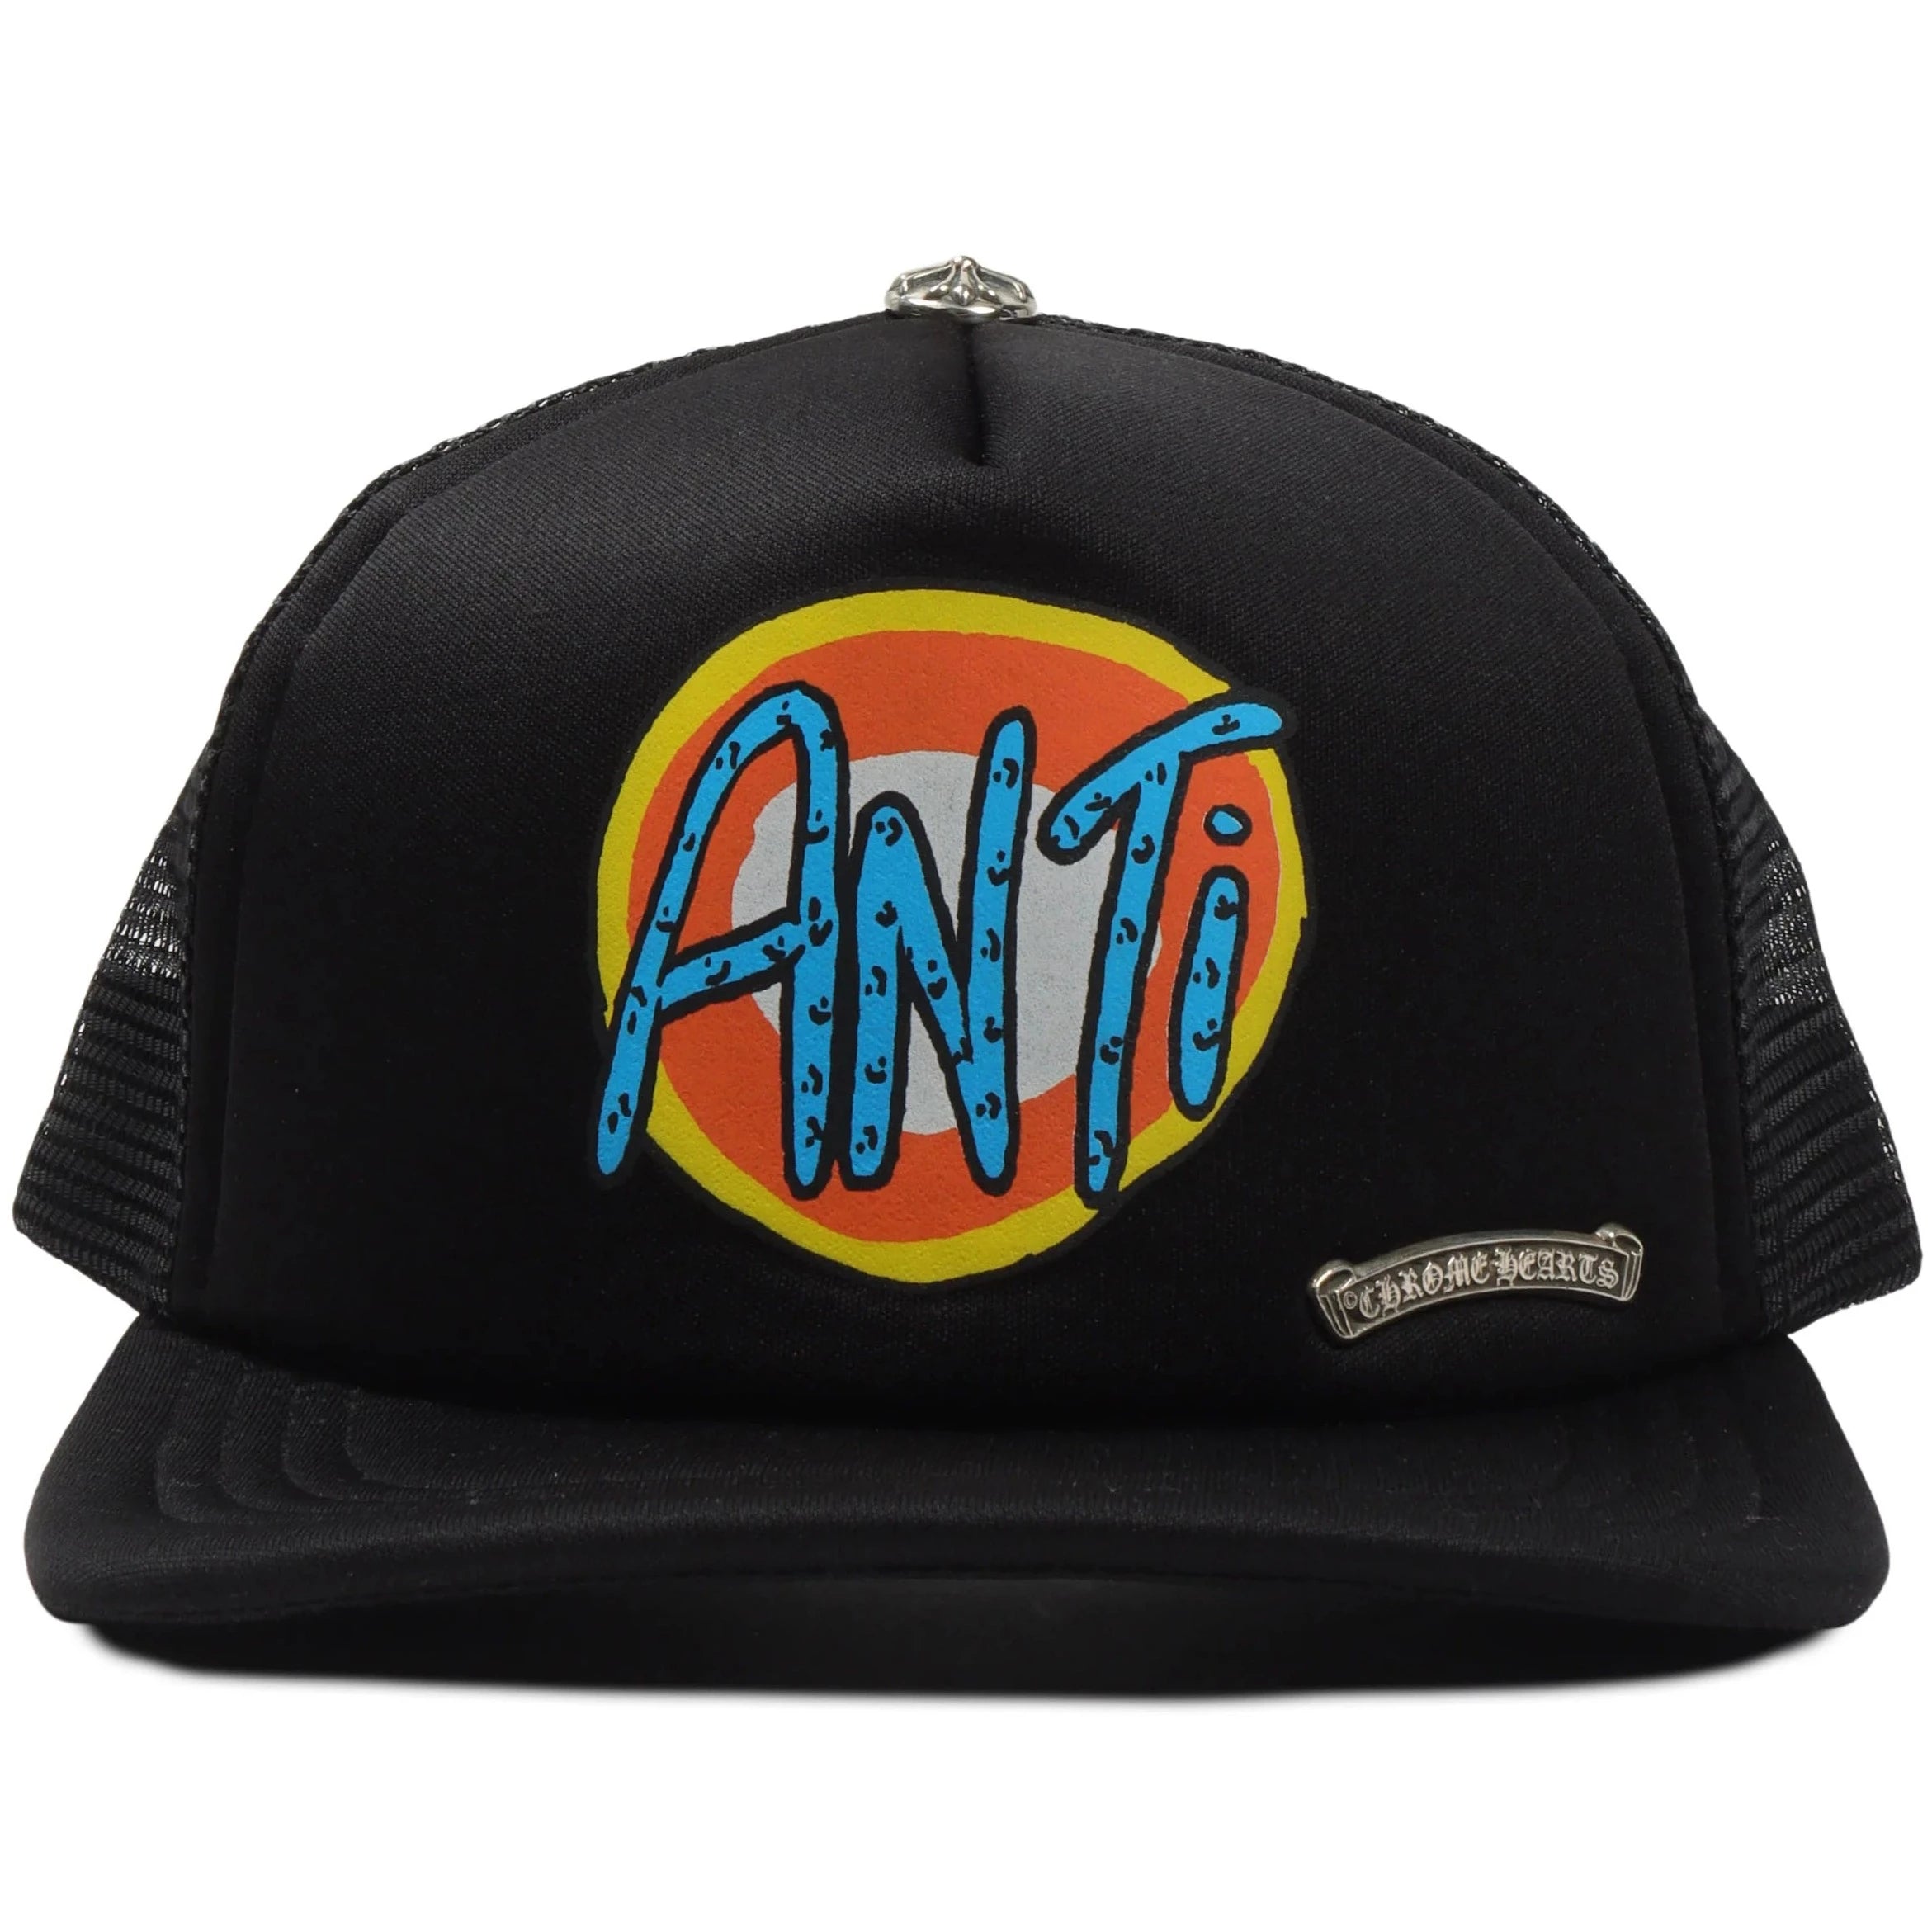 Matty Boy ANTI Trucker Hat Black